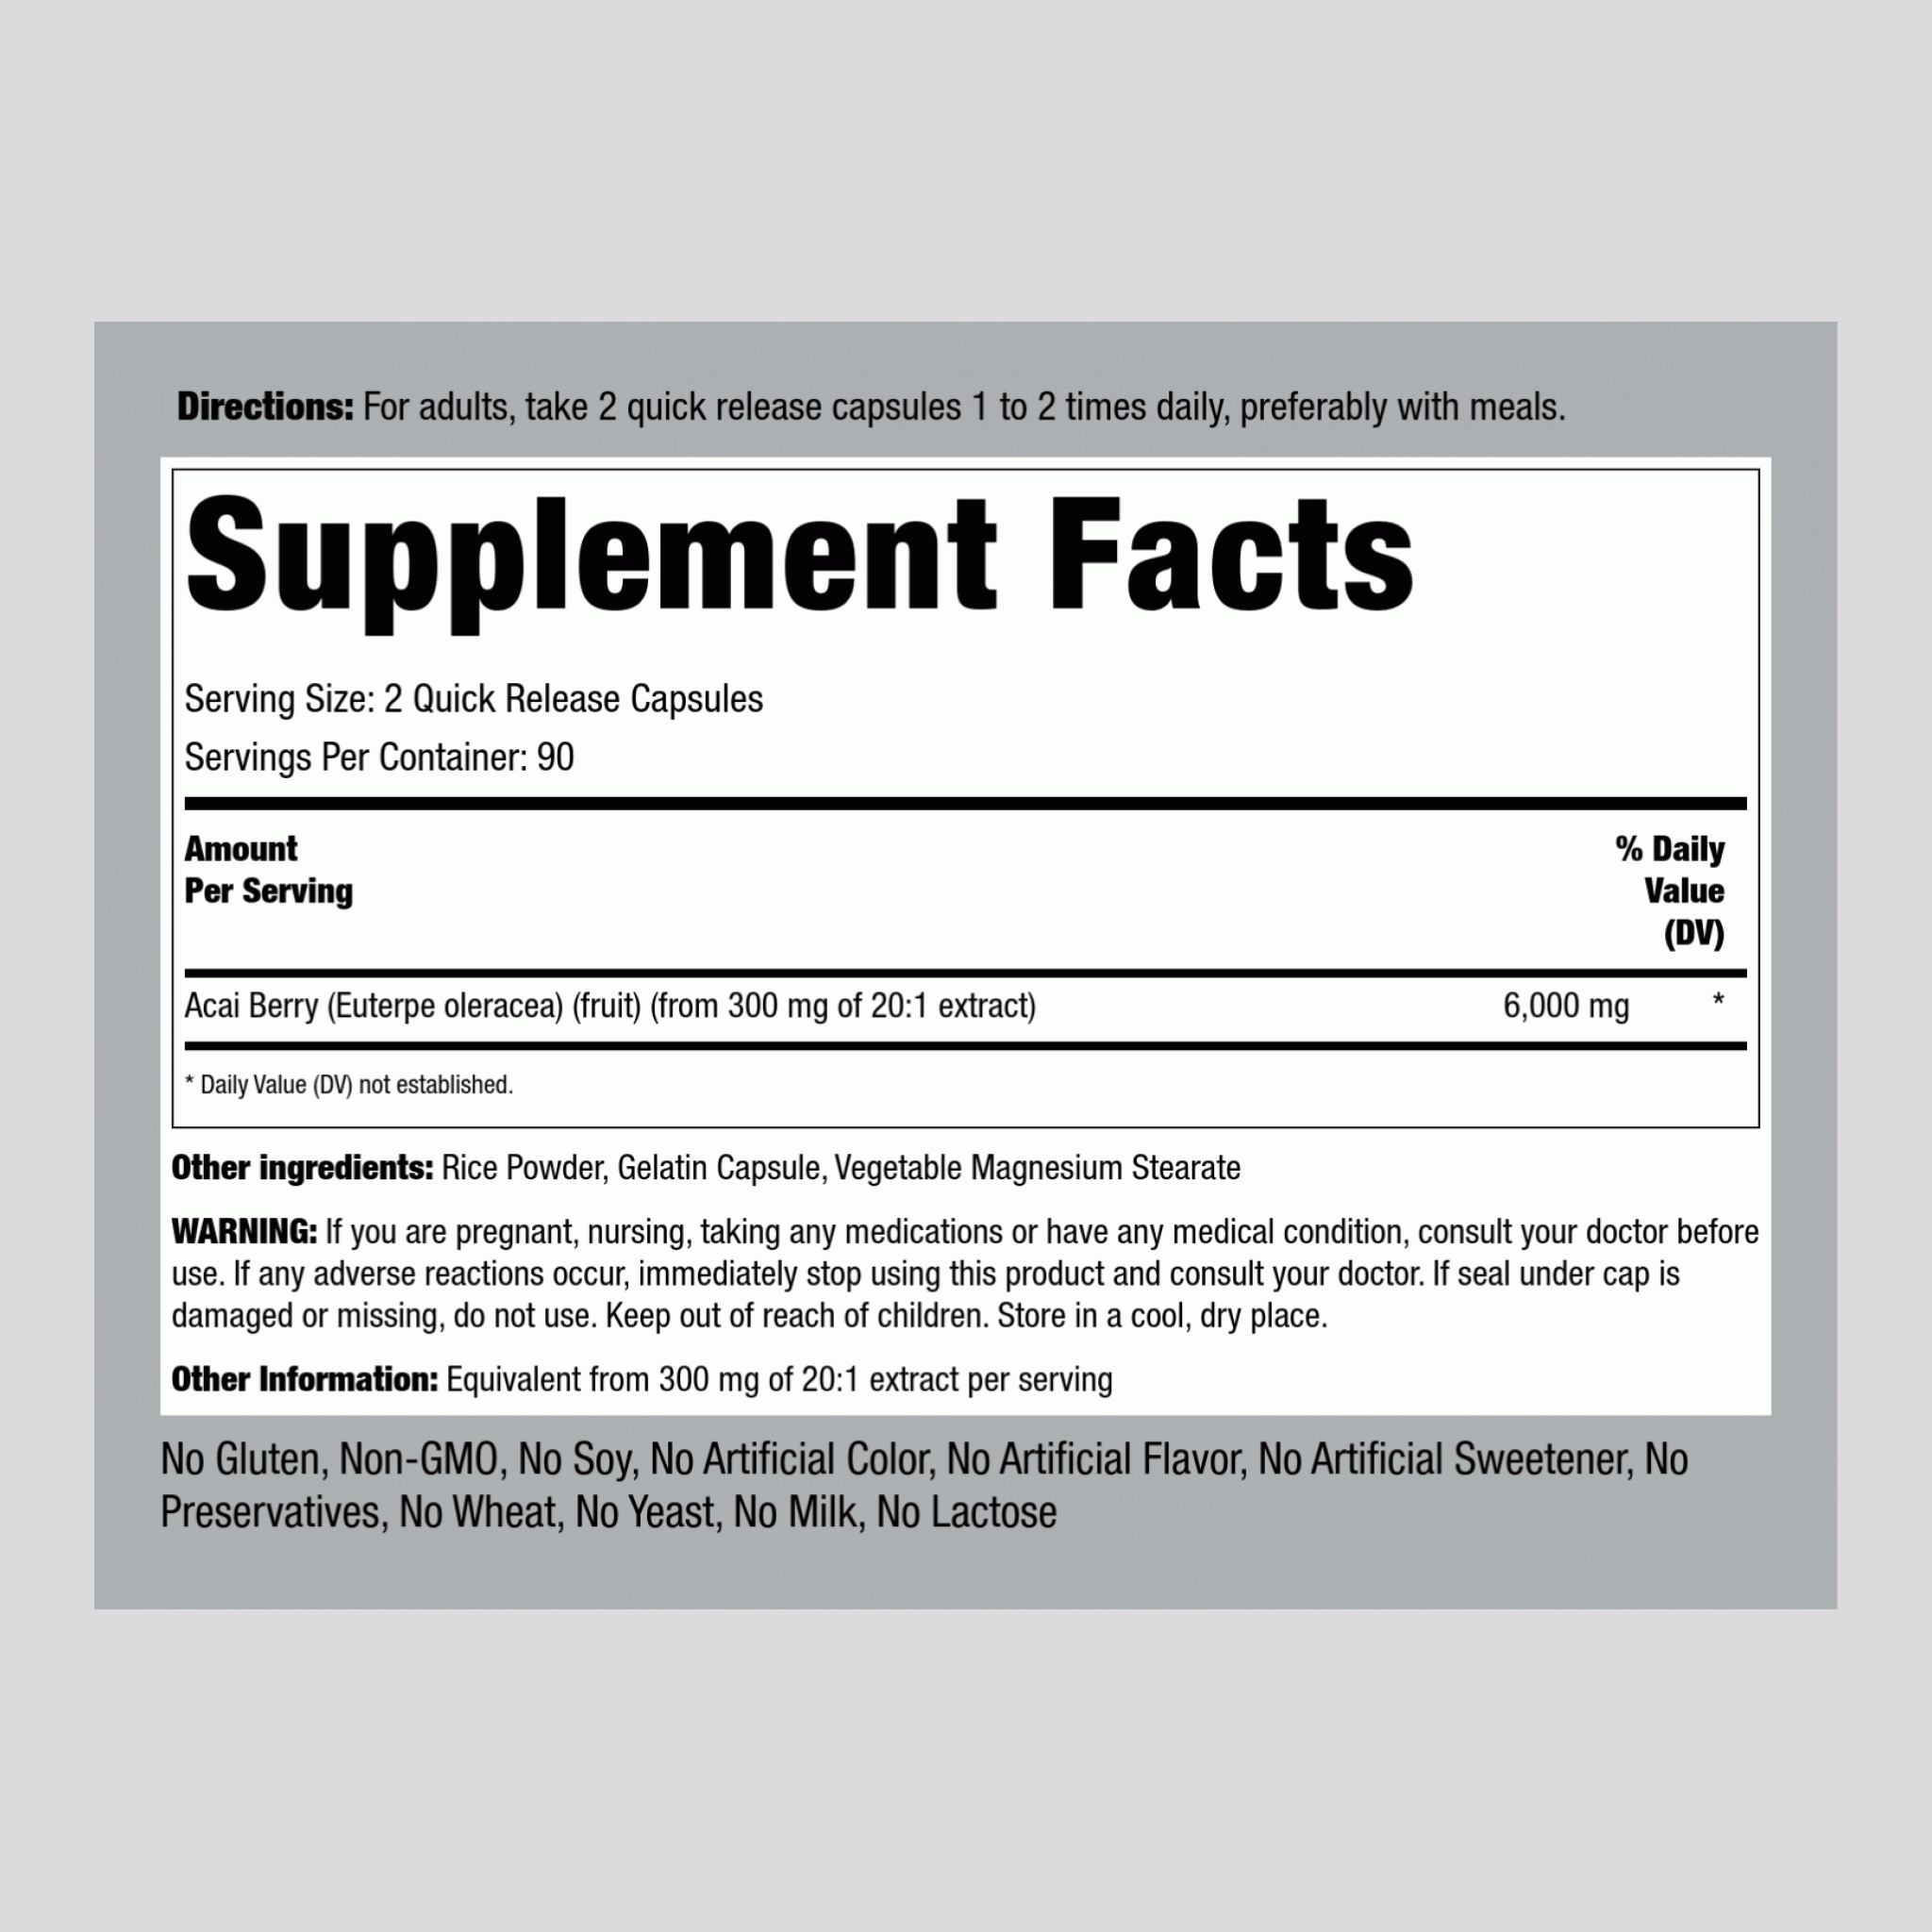 Triple Strength Acai Supreme, 6000 mg (per serving), 180 Quick Release Capsules